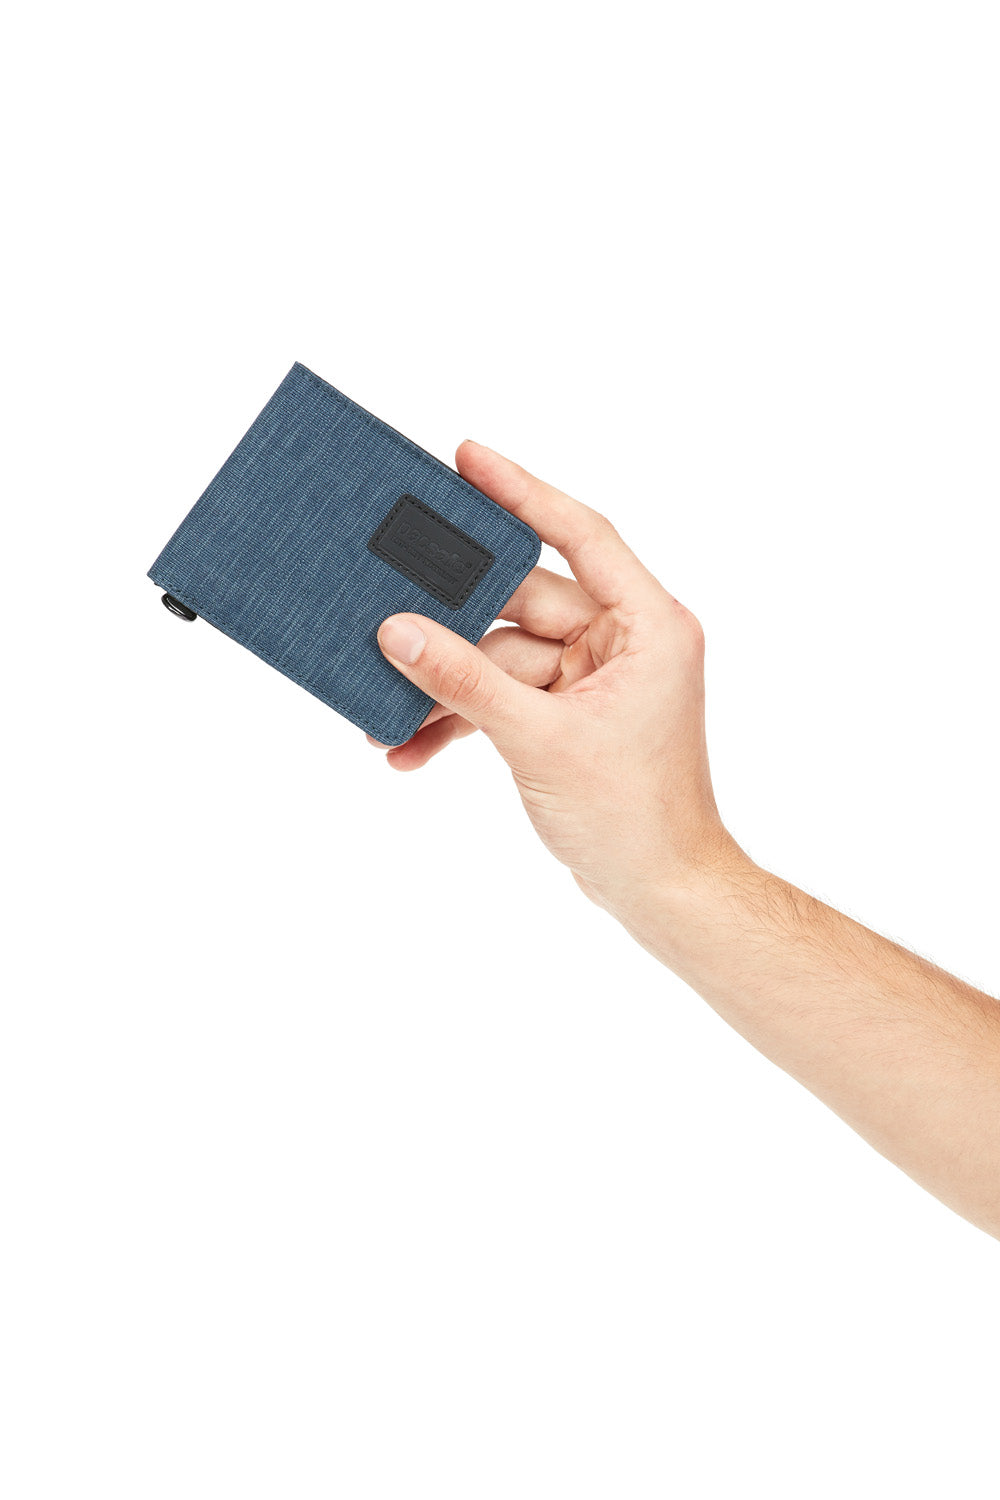 RFIDsafe™ RFID blocking bifold wallet | Pacsafe® - Pacsafe – Official ...